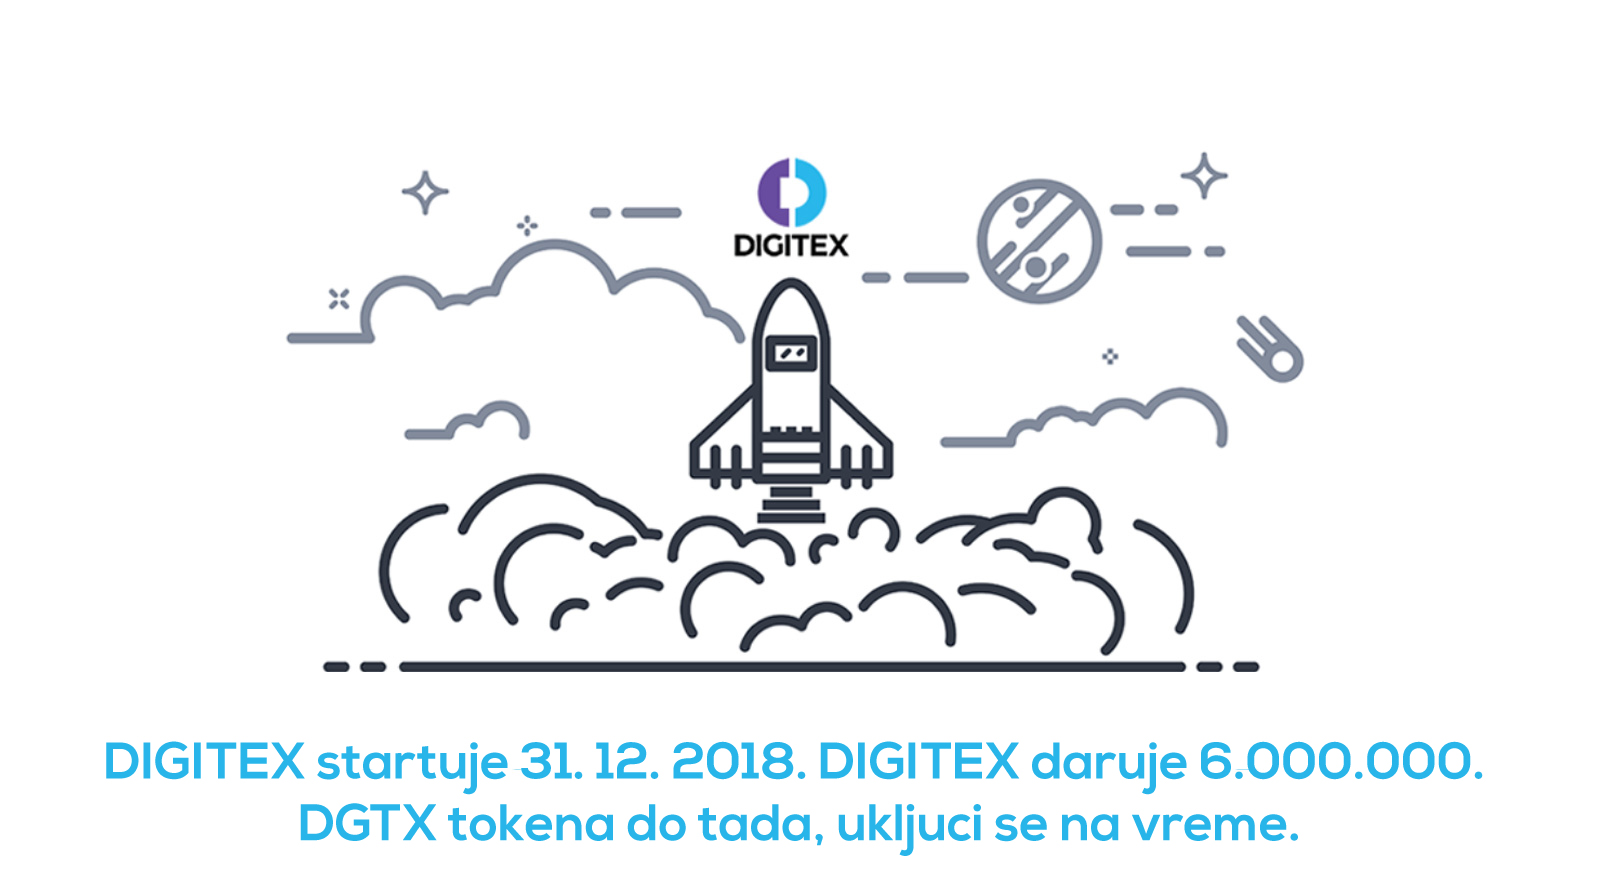 Digitex trejding DGTX 0 fee